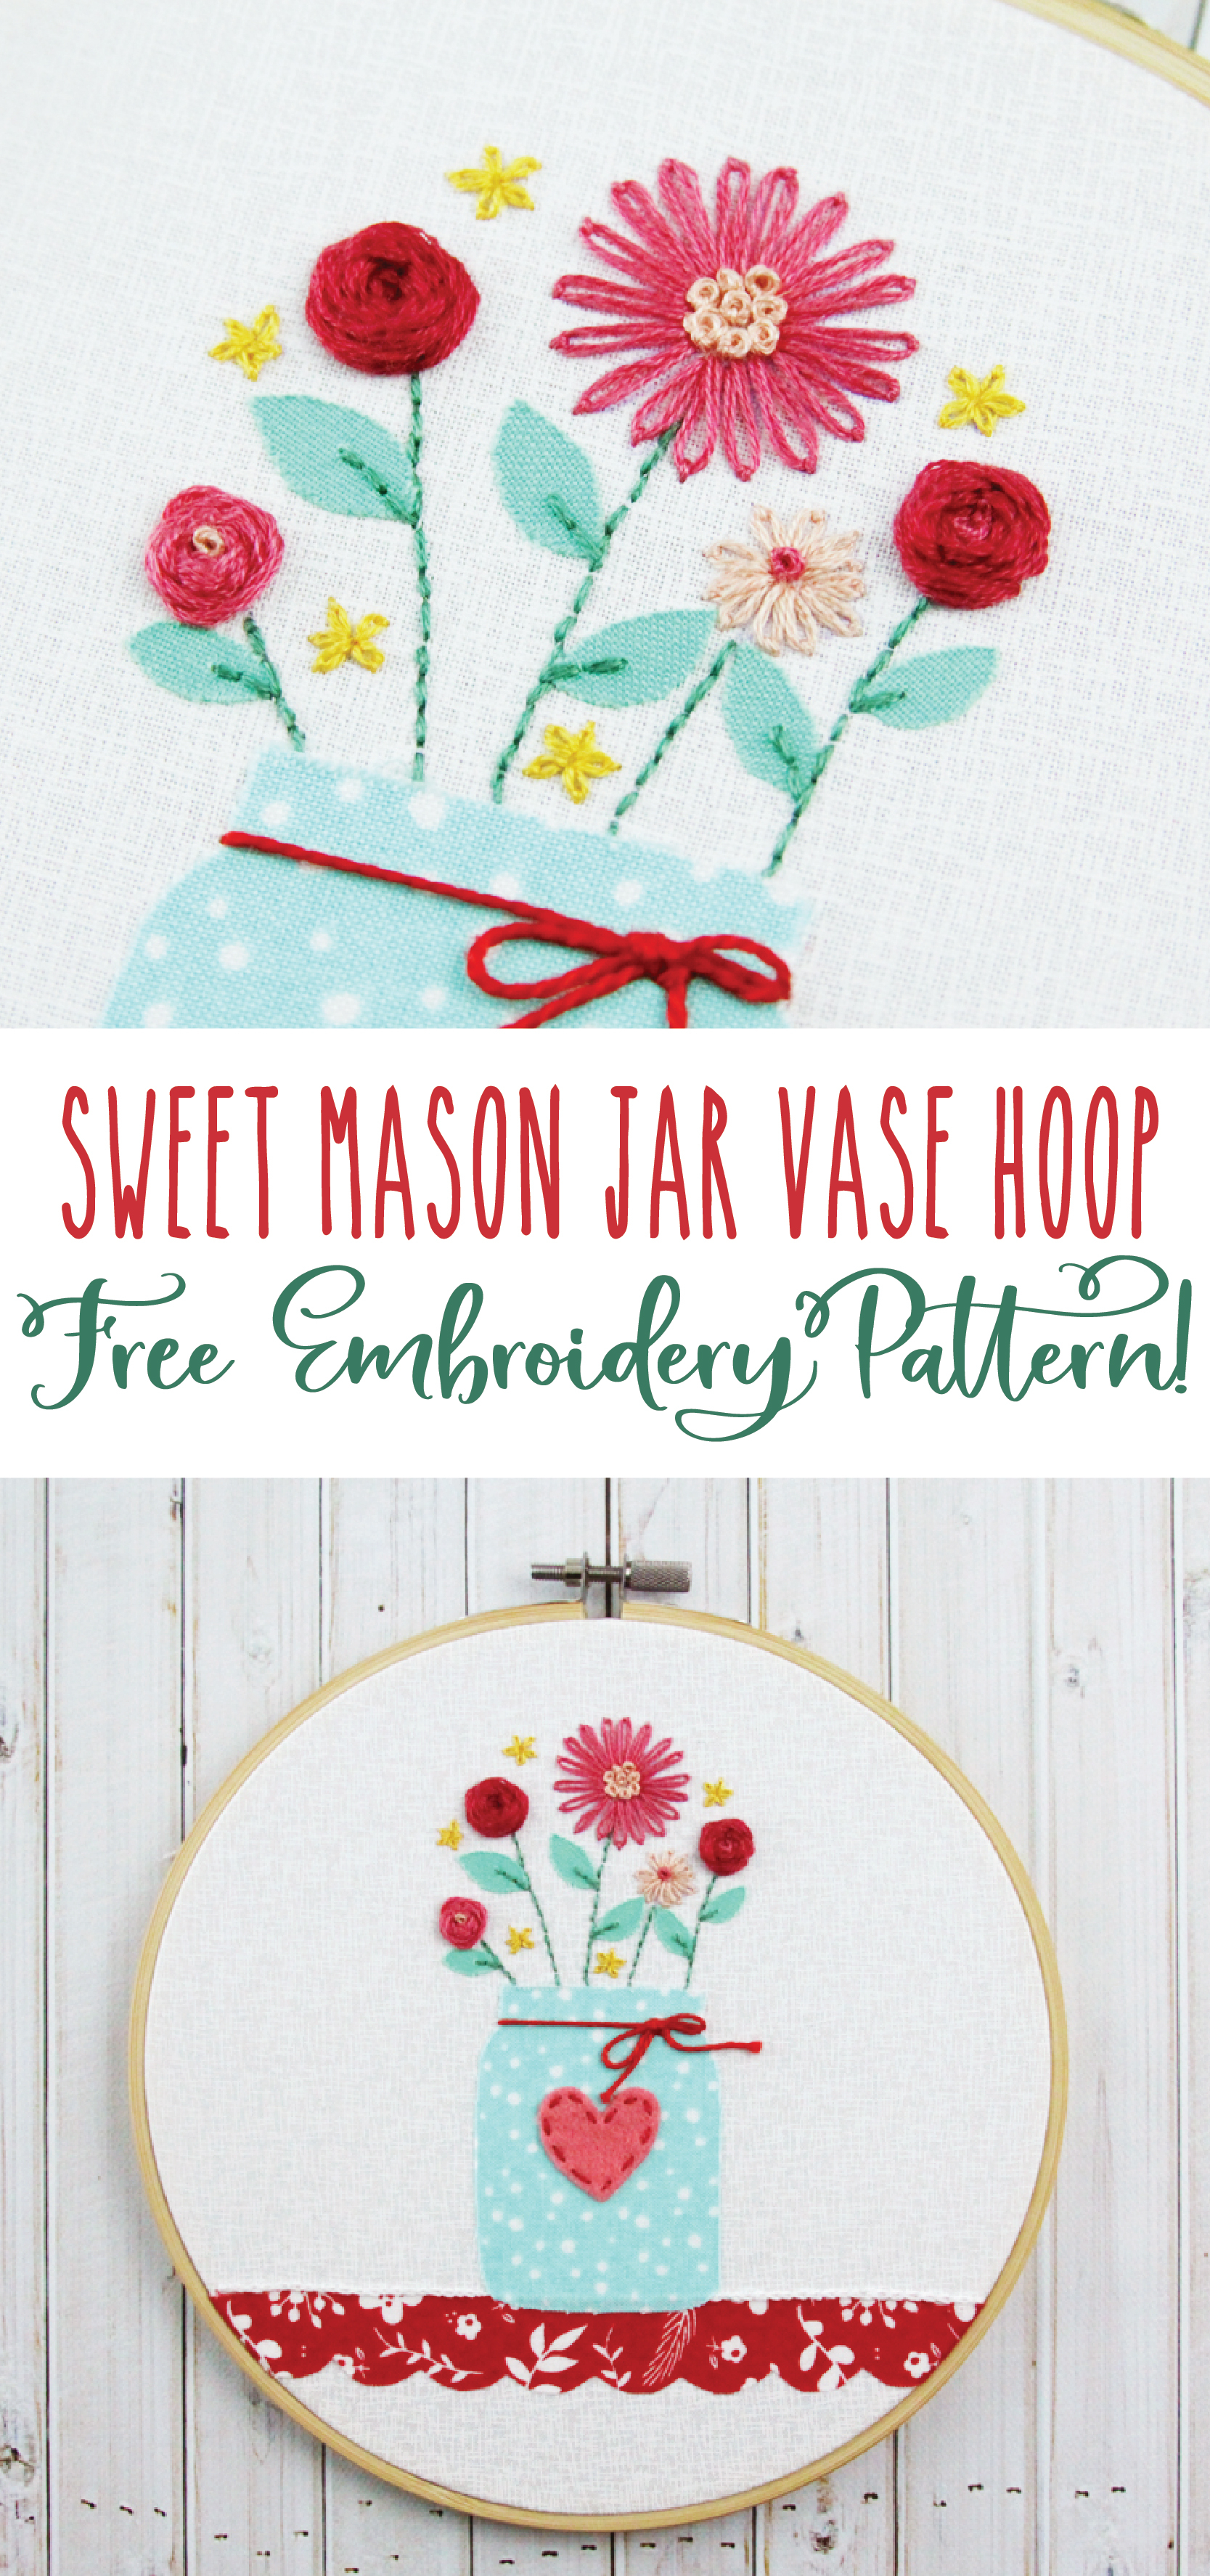 Embroidery Free Patterns Sweet Mason Jar Vase Hoop Free Embroidery Pattern